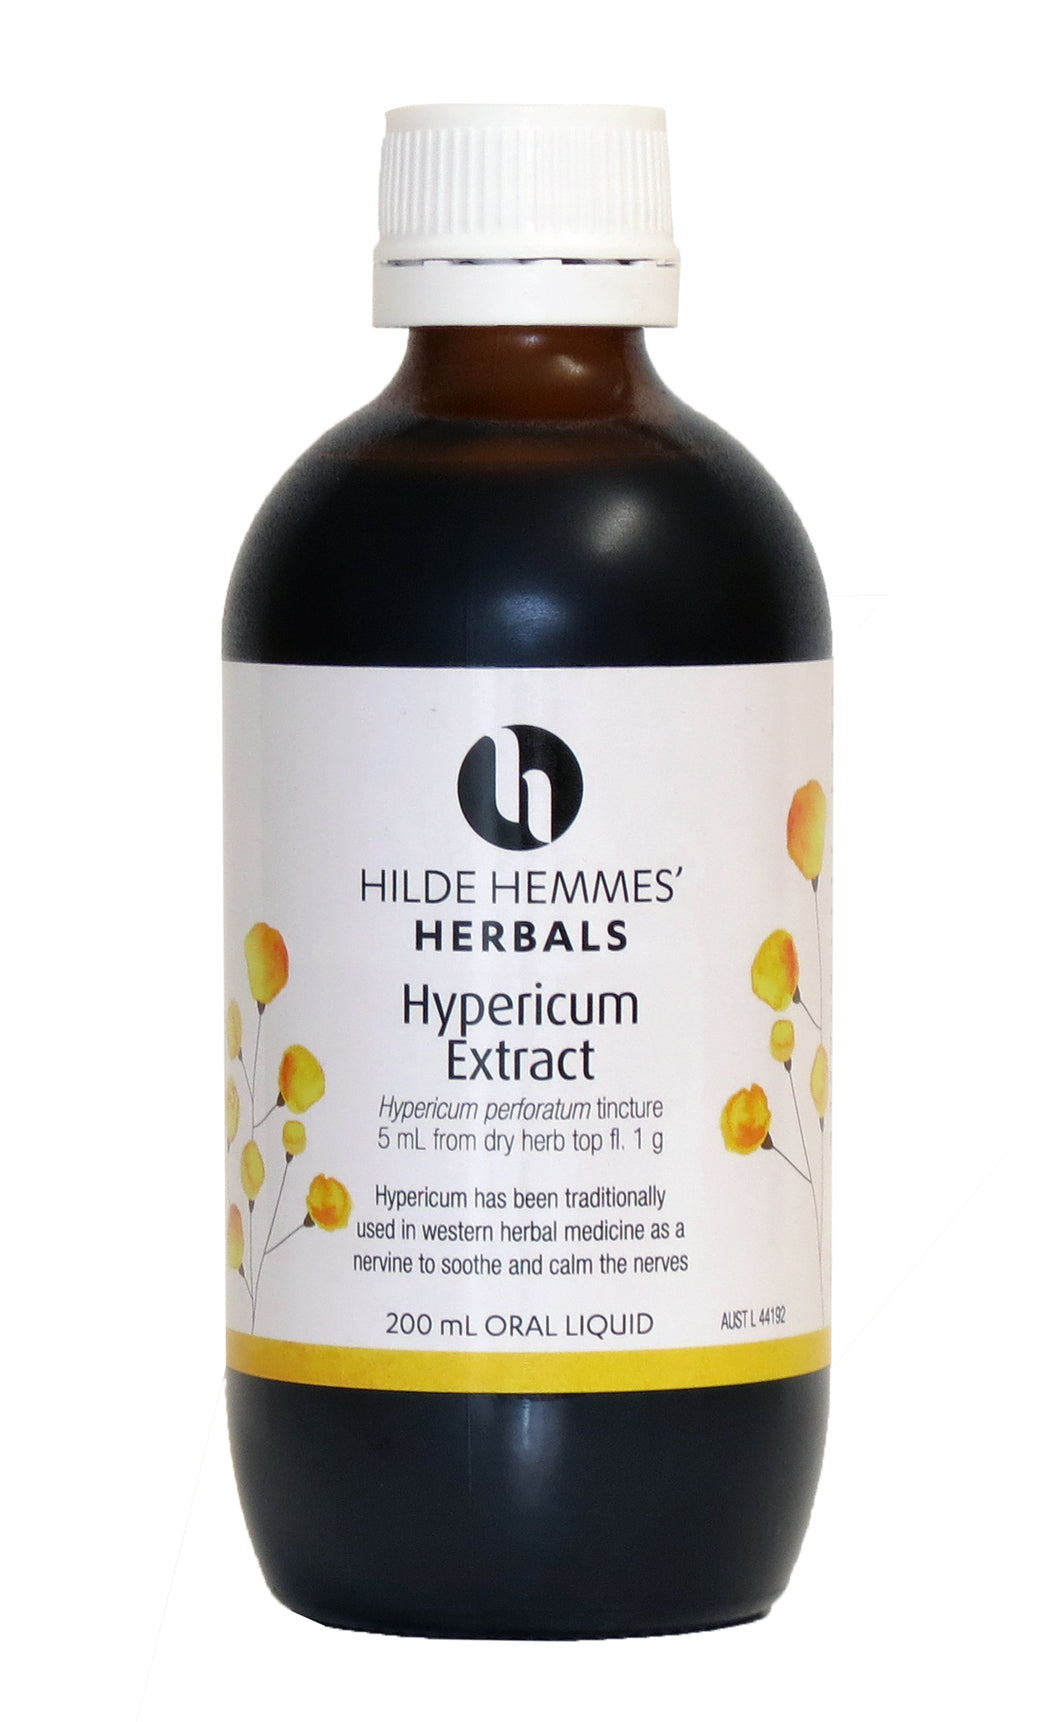 Hilde Hemmes Herbal's, Hypericum 200 ml St John's Wort Liquid Extract